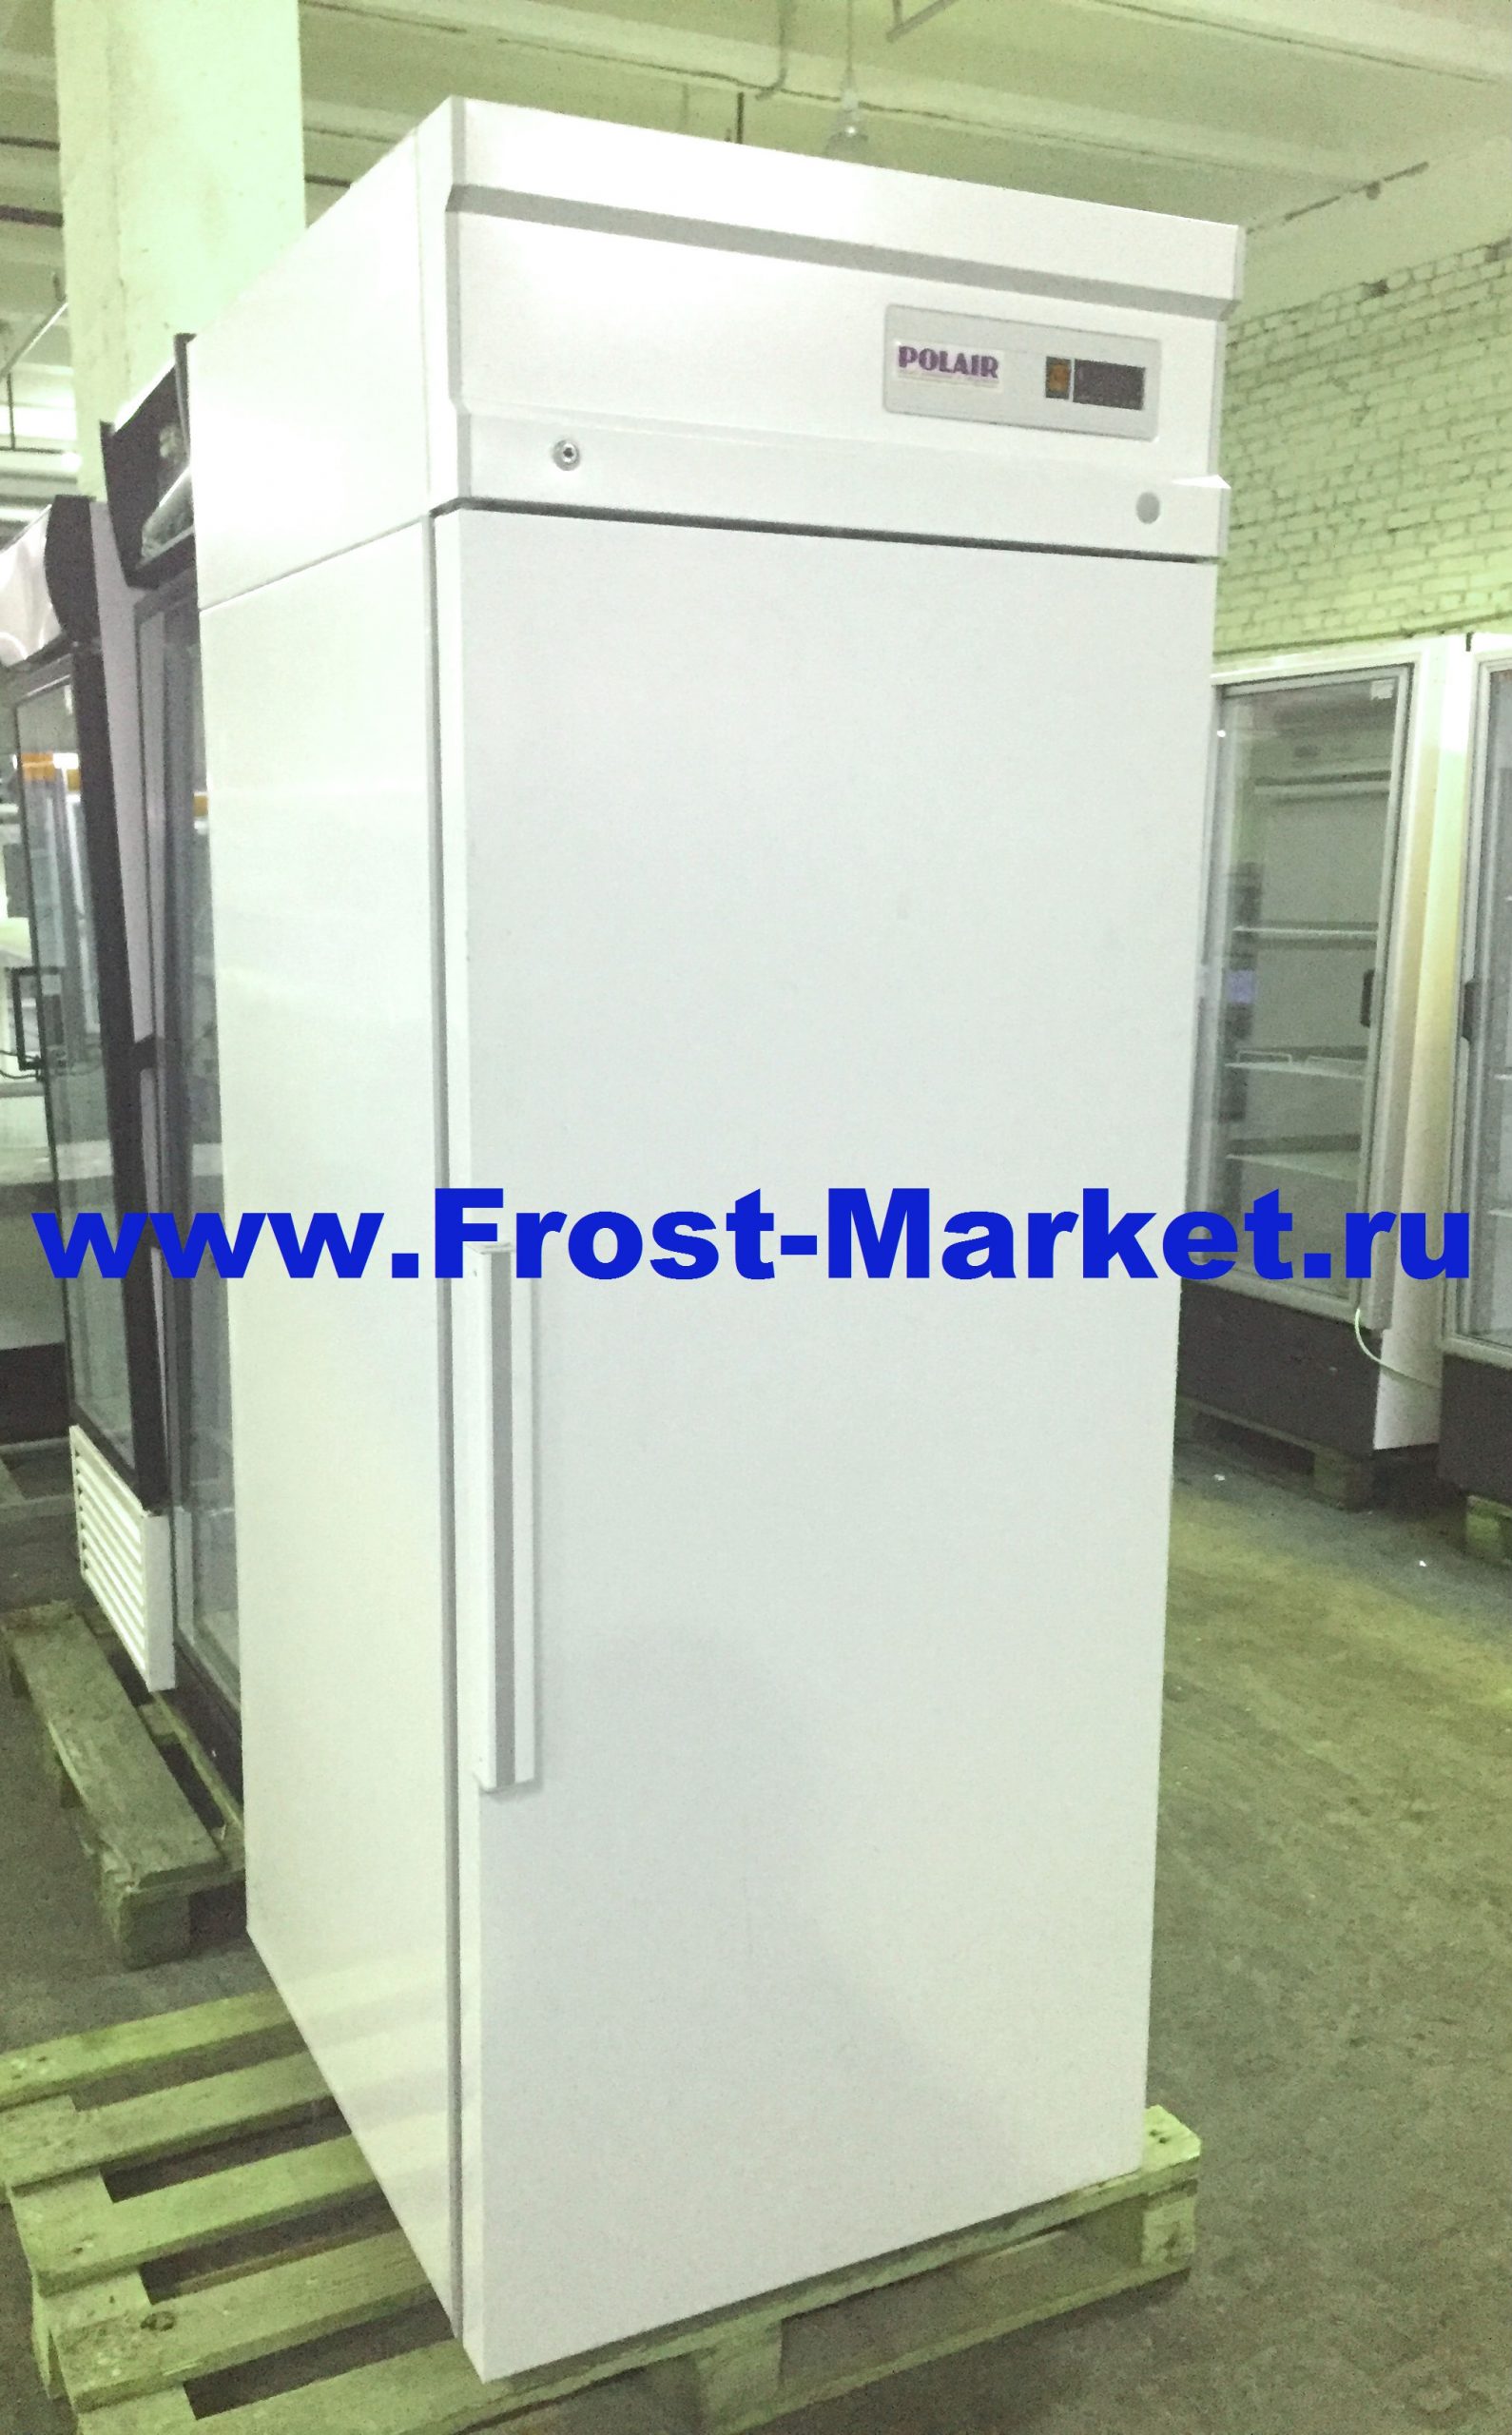 Холодильный шкаф Polair 107-s